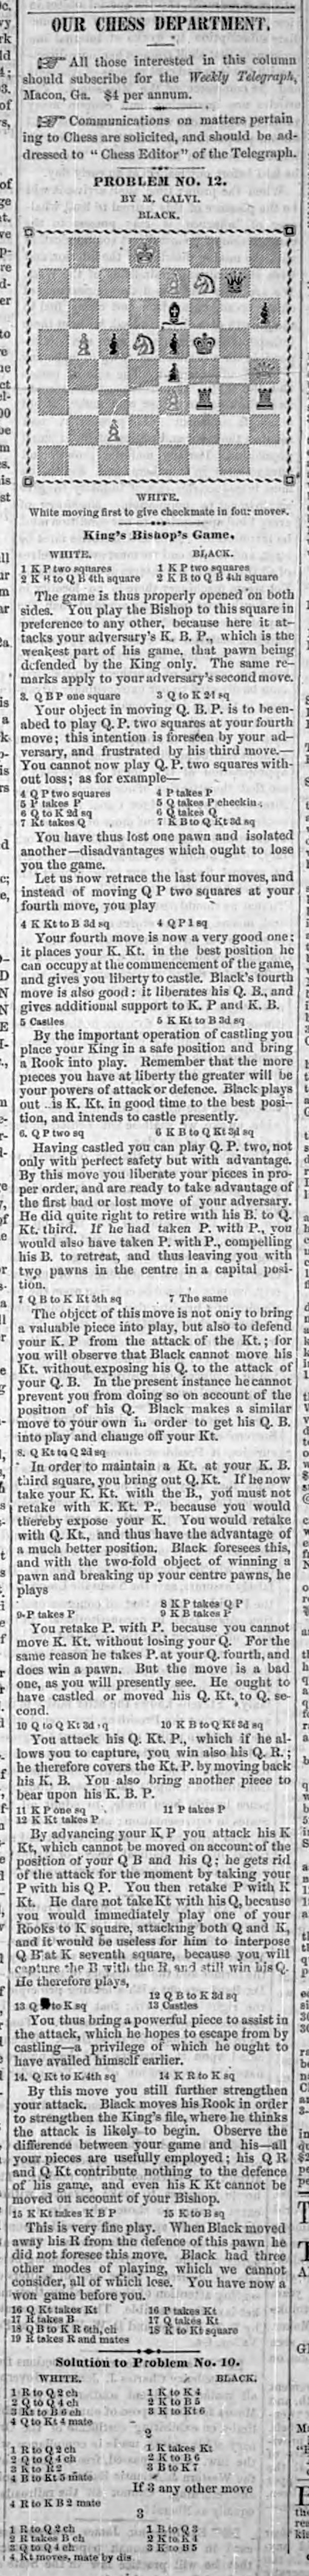 1866.10.08-01 Macon Georgia Weekly Telegraph.jpg